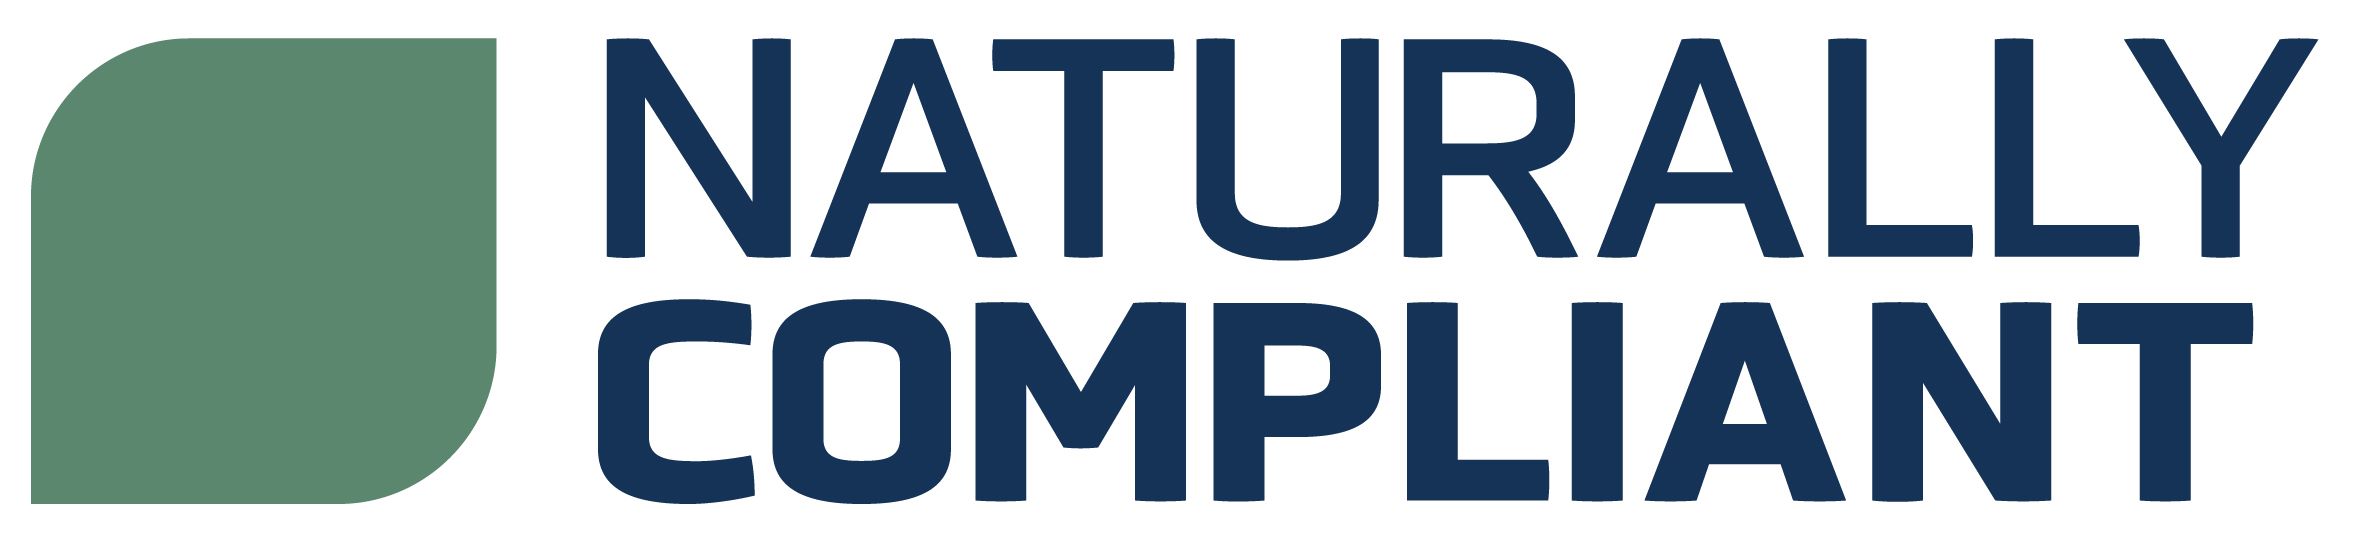 Naturally Compliant Ltd logo